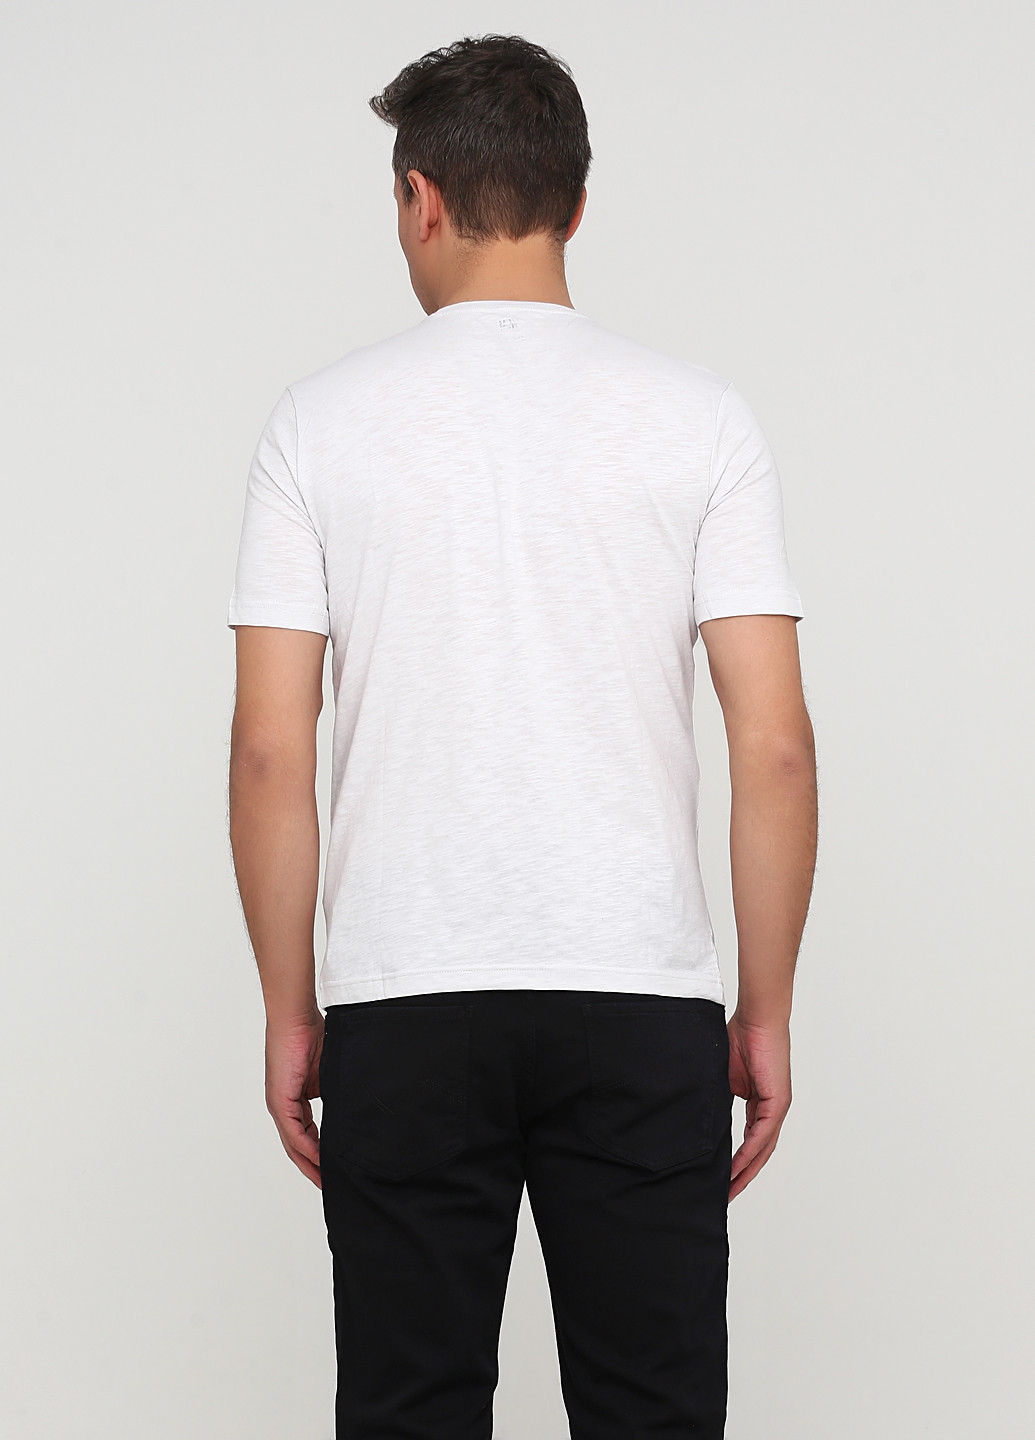 Светло-серая футболка-поло для мужчин H&M меланжевая